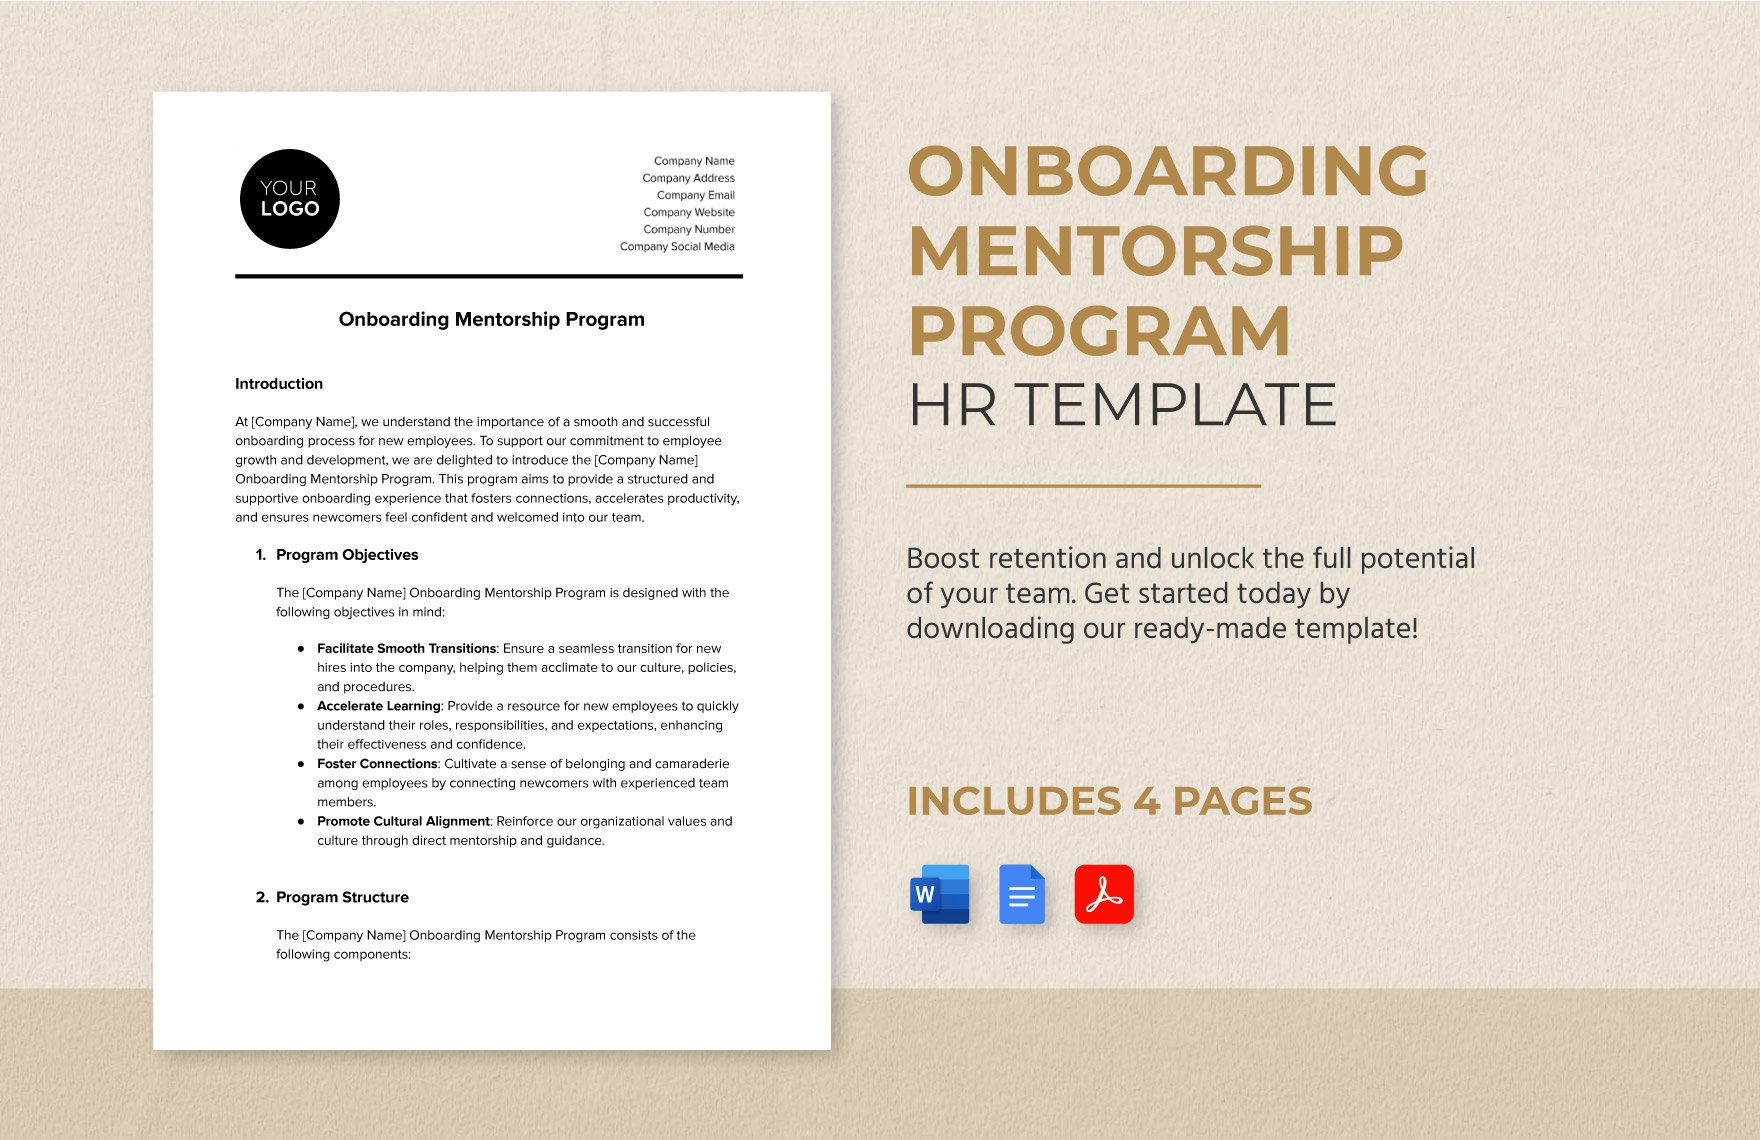 Onboarding Mentorship Program HR Template